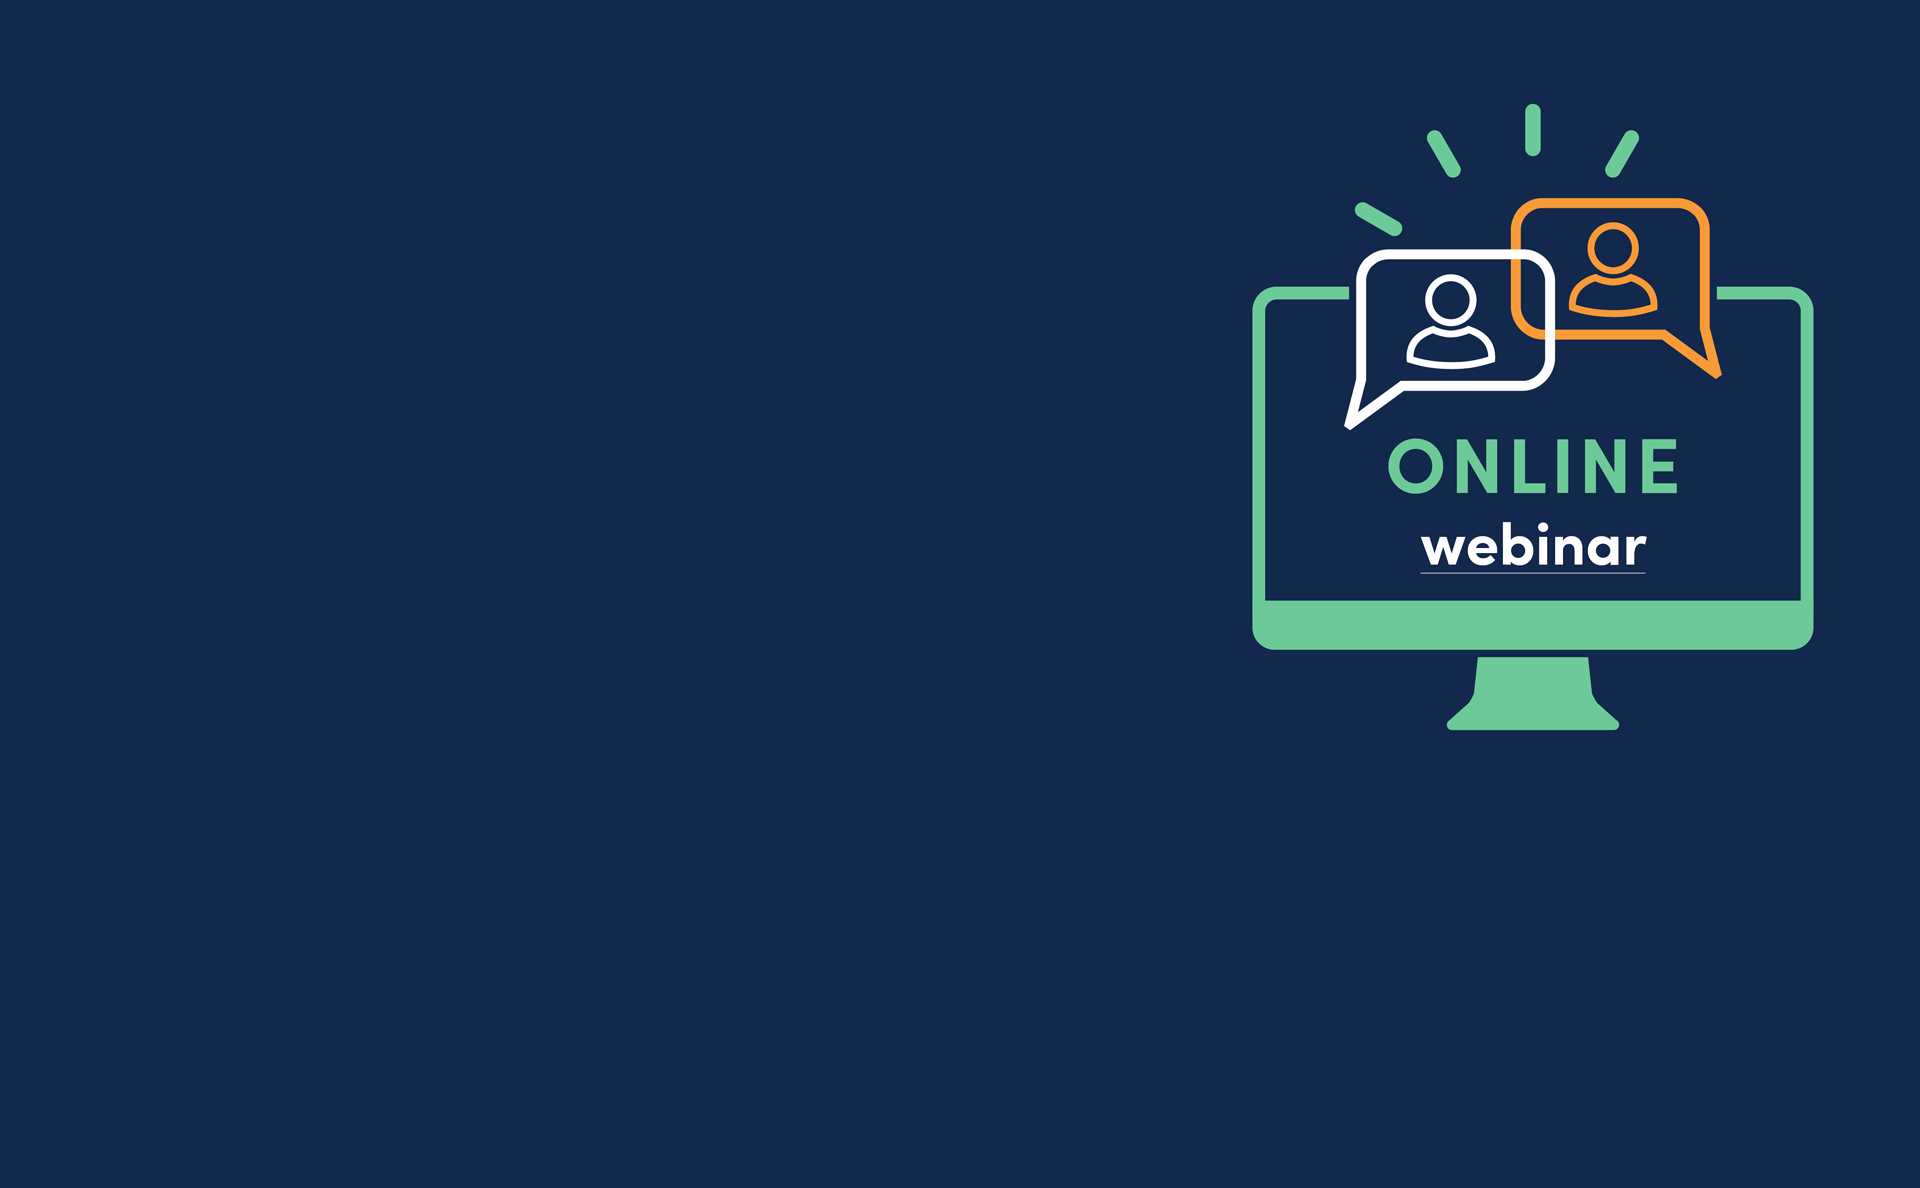 Accord online webinar logo on blue background